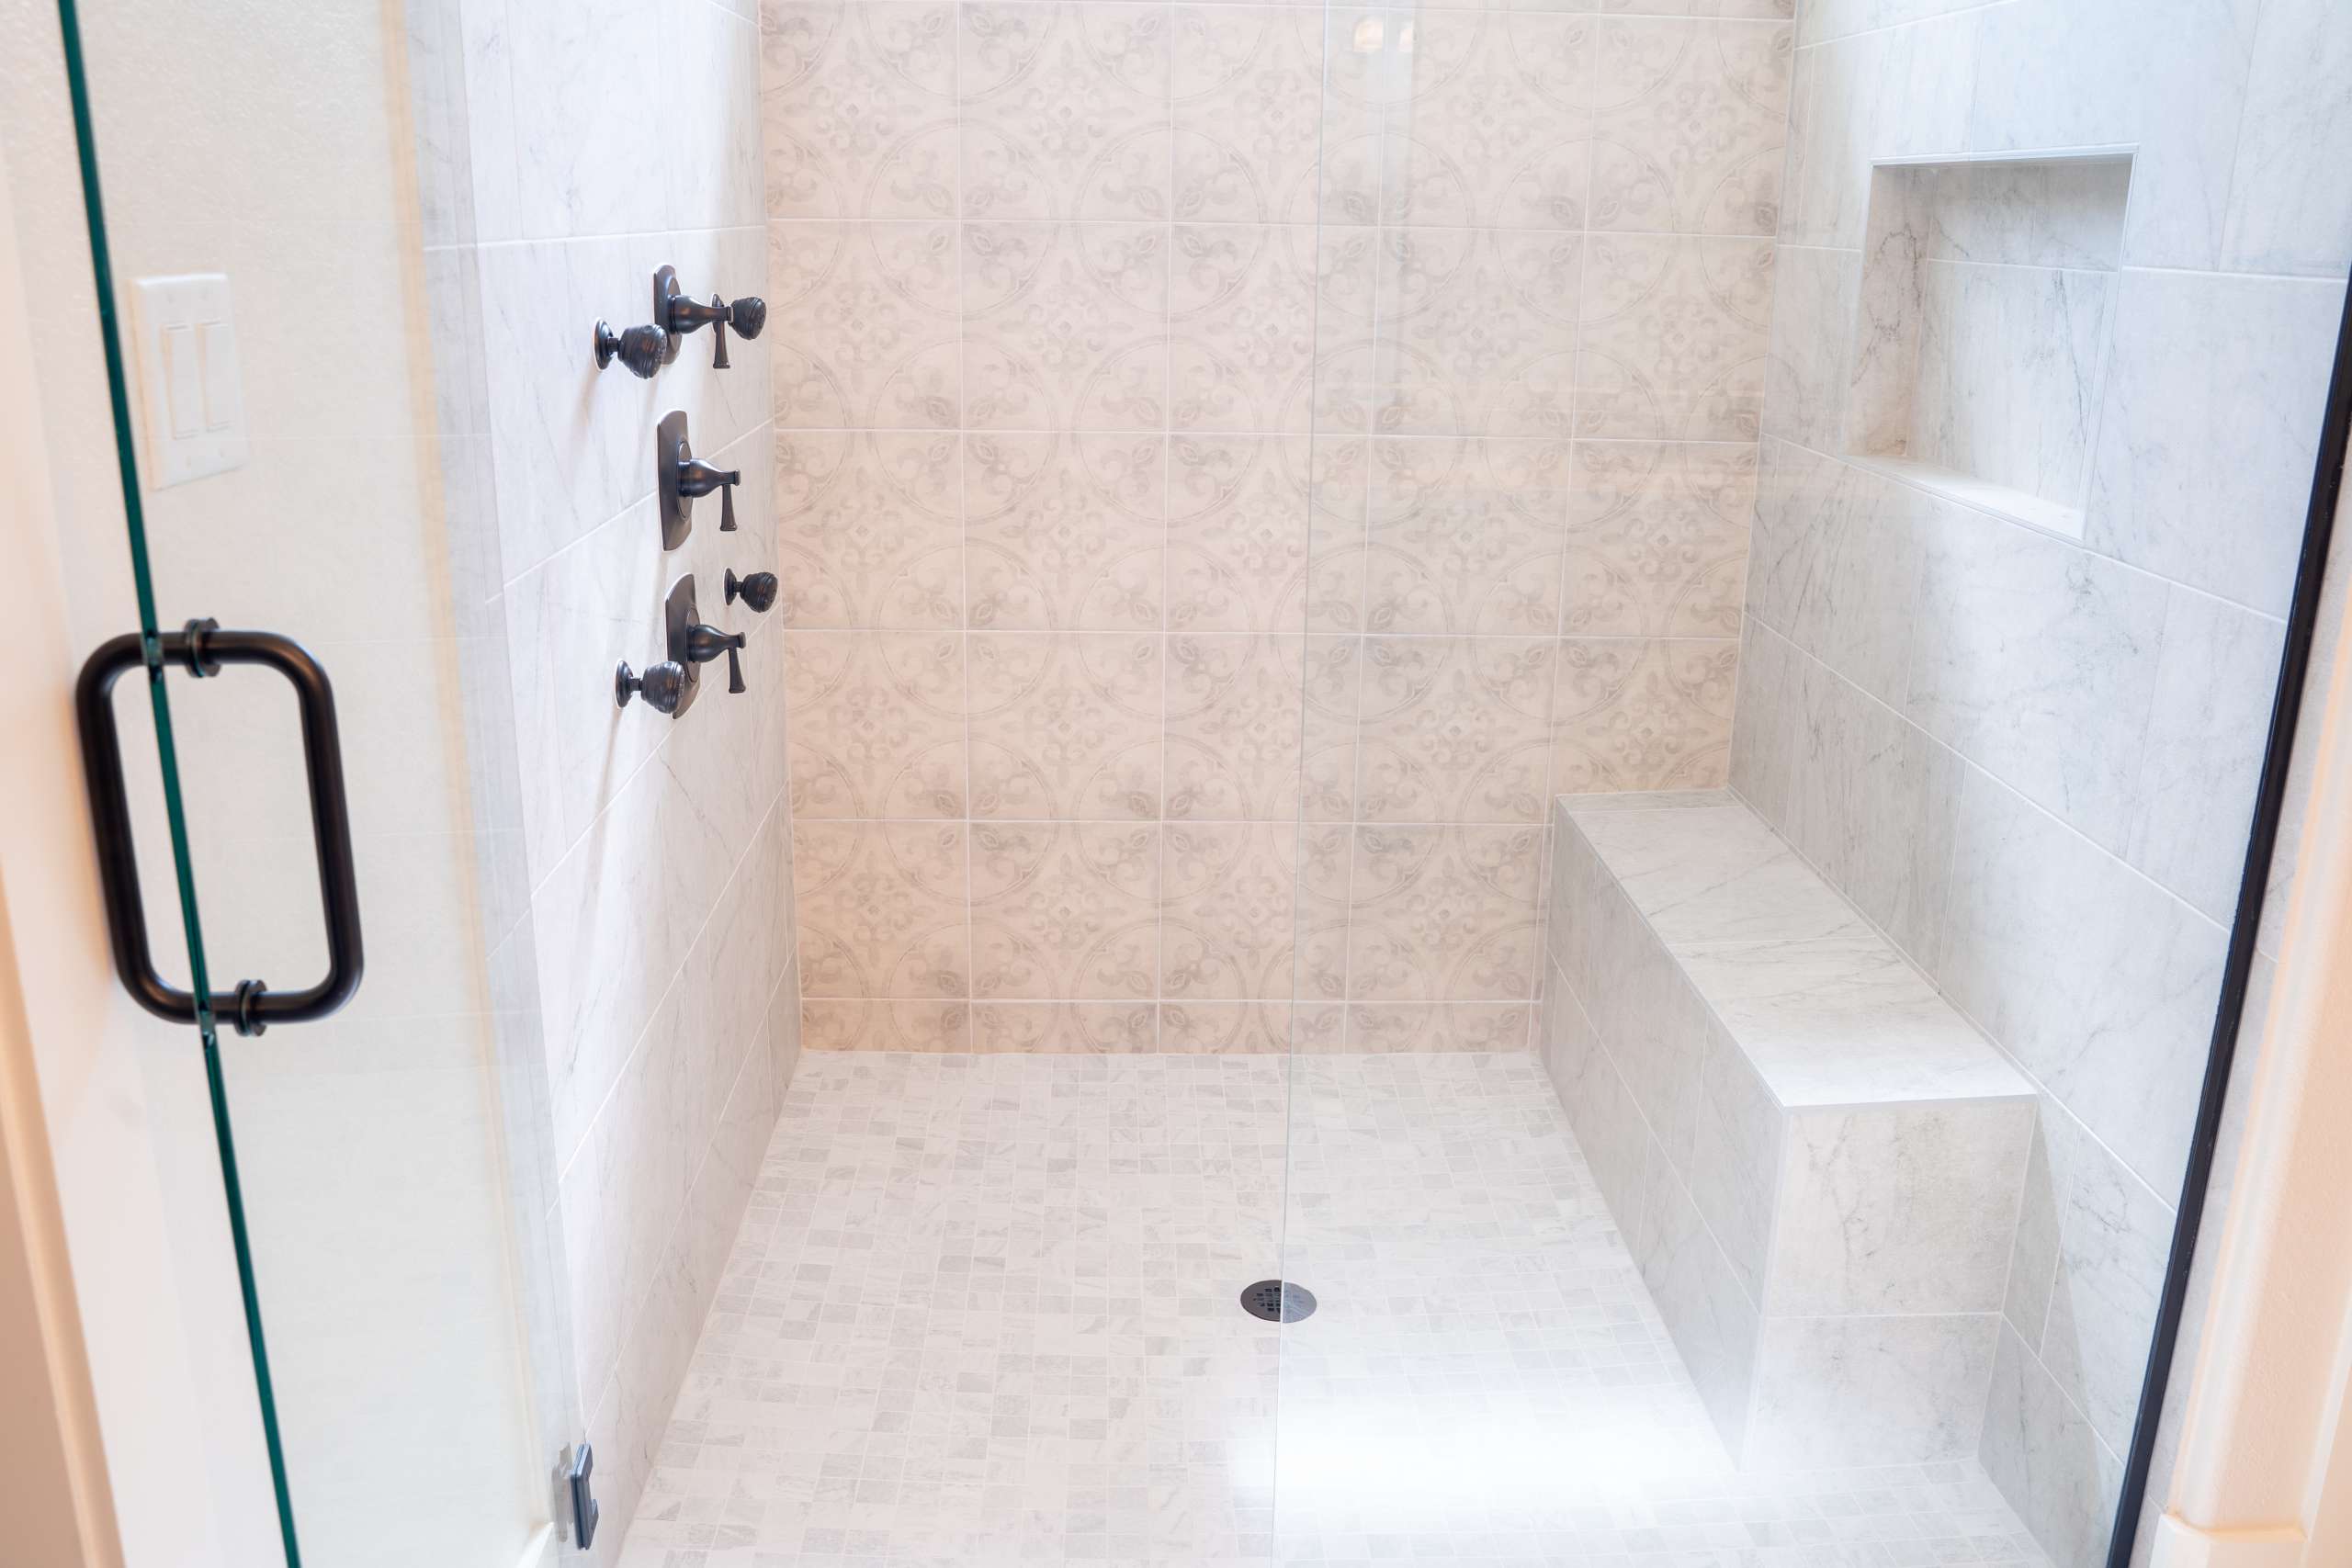 Tile Shower Surround